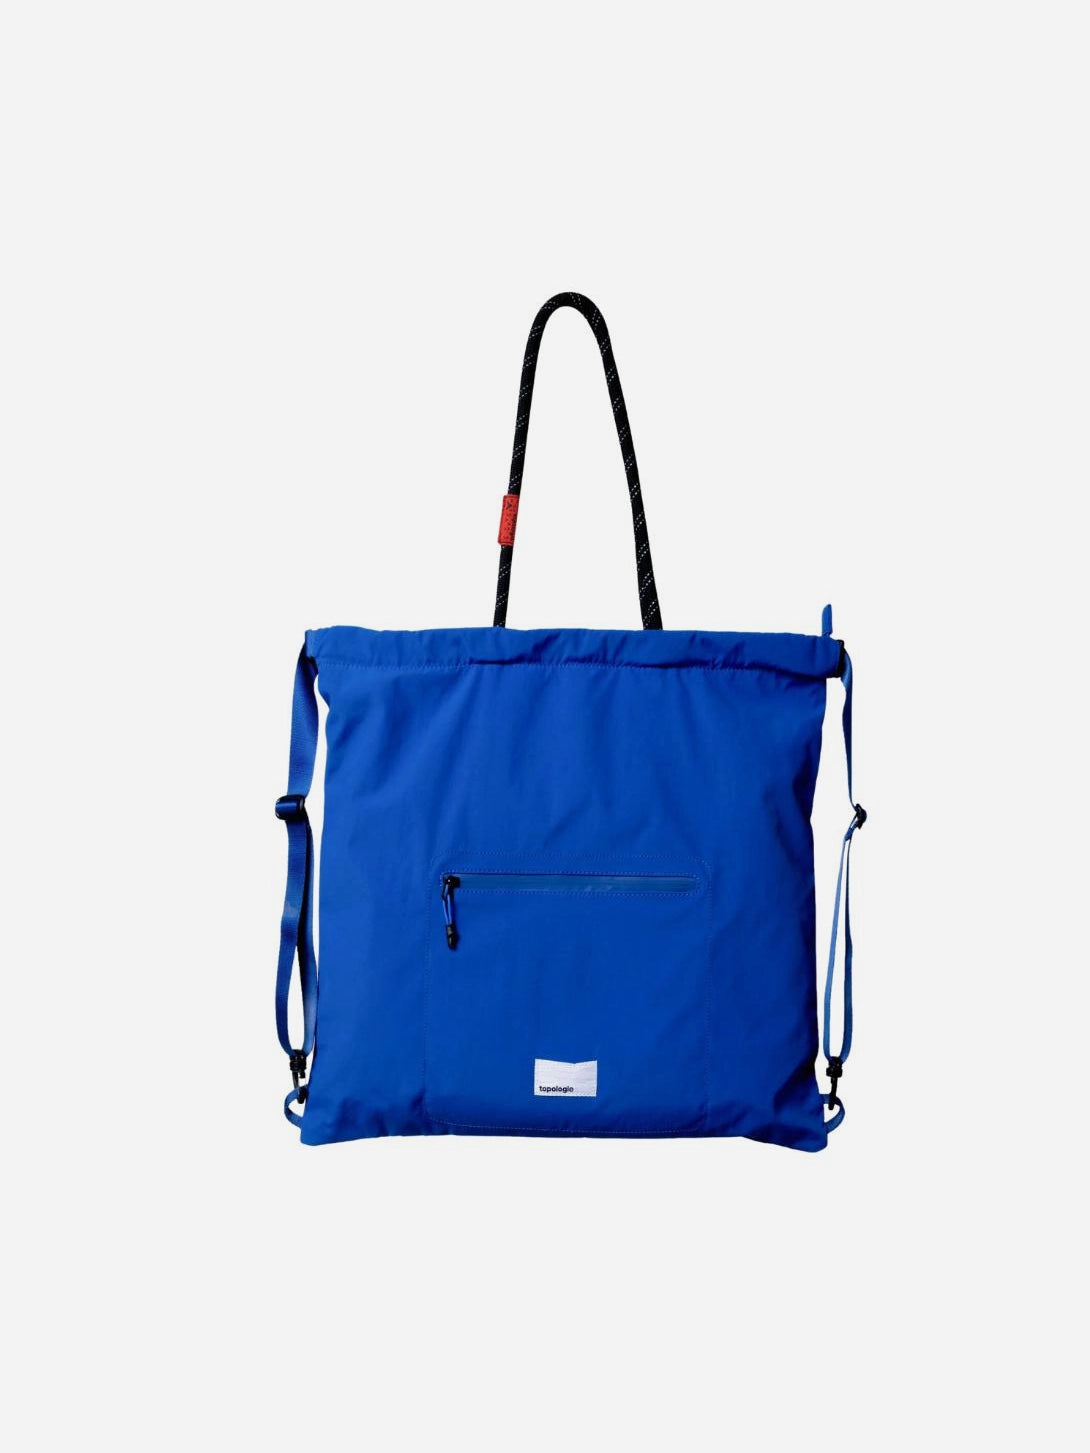 Future Blue Topologie Drawstring Tote Bag